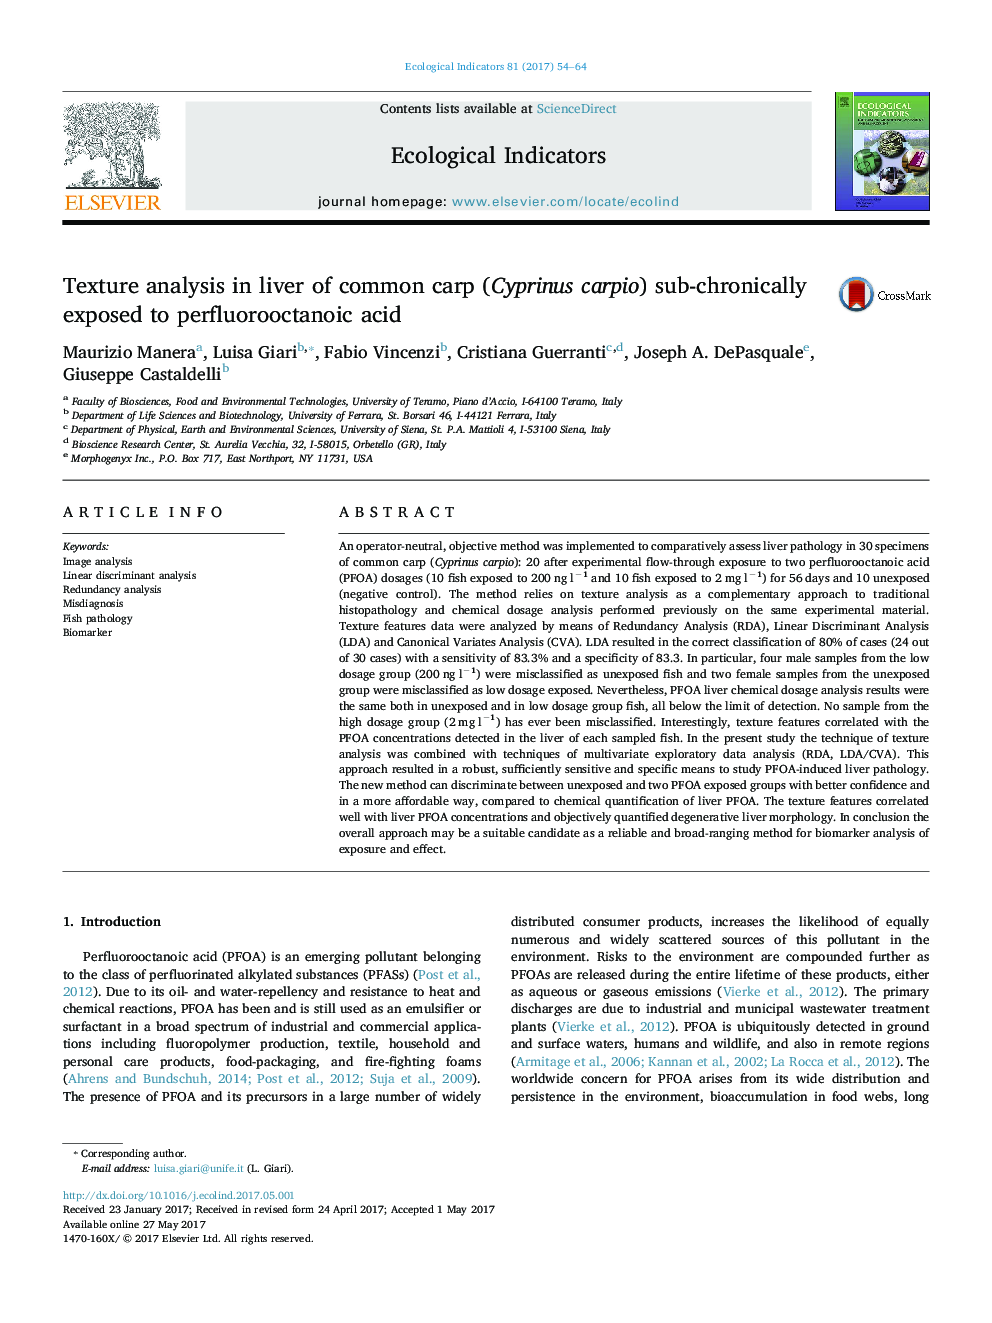 Texture analysis in liver of common carp (Cyprinus carpio) sub-chronically exposed to perfluorooctanoic acid